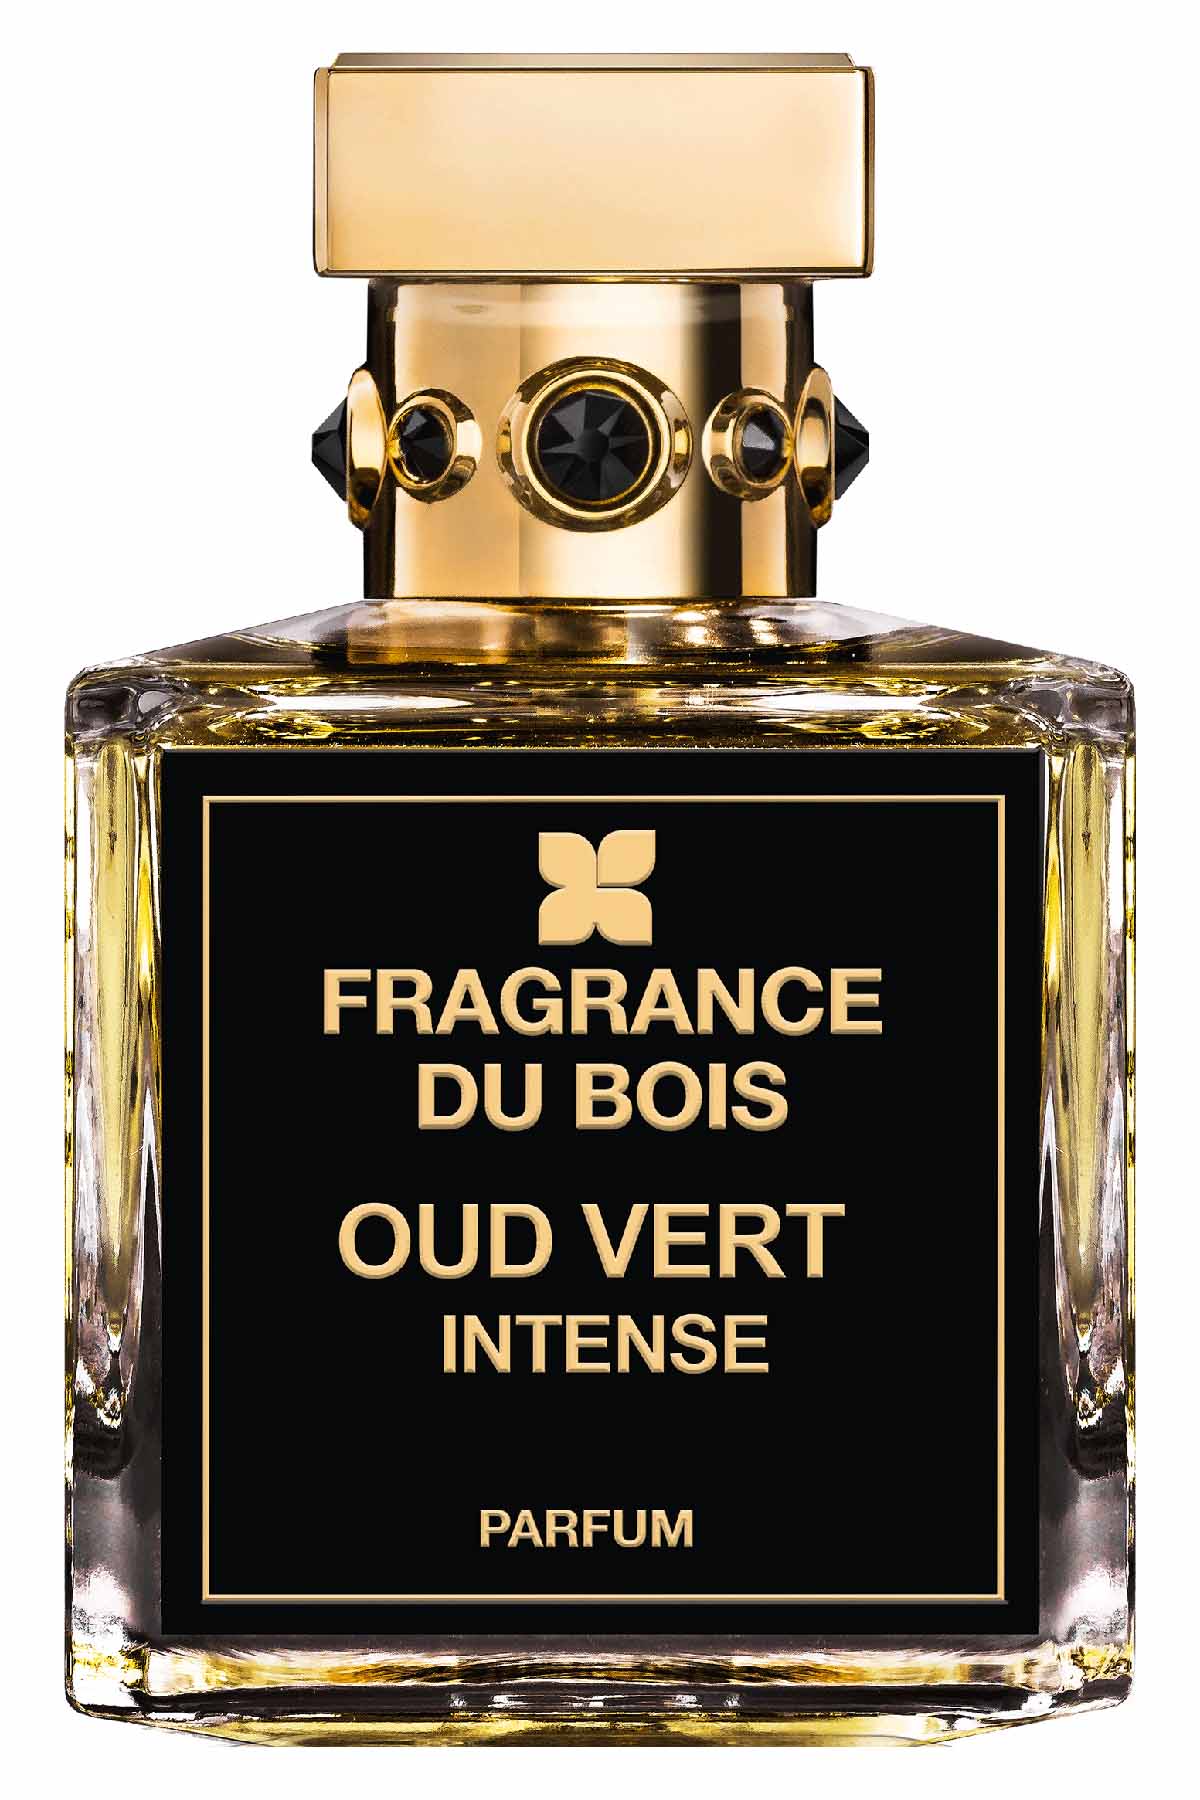 Fragrance Du Bois Oud Vert Intense Parfum